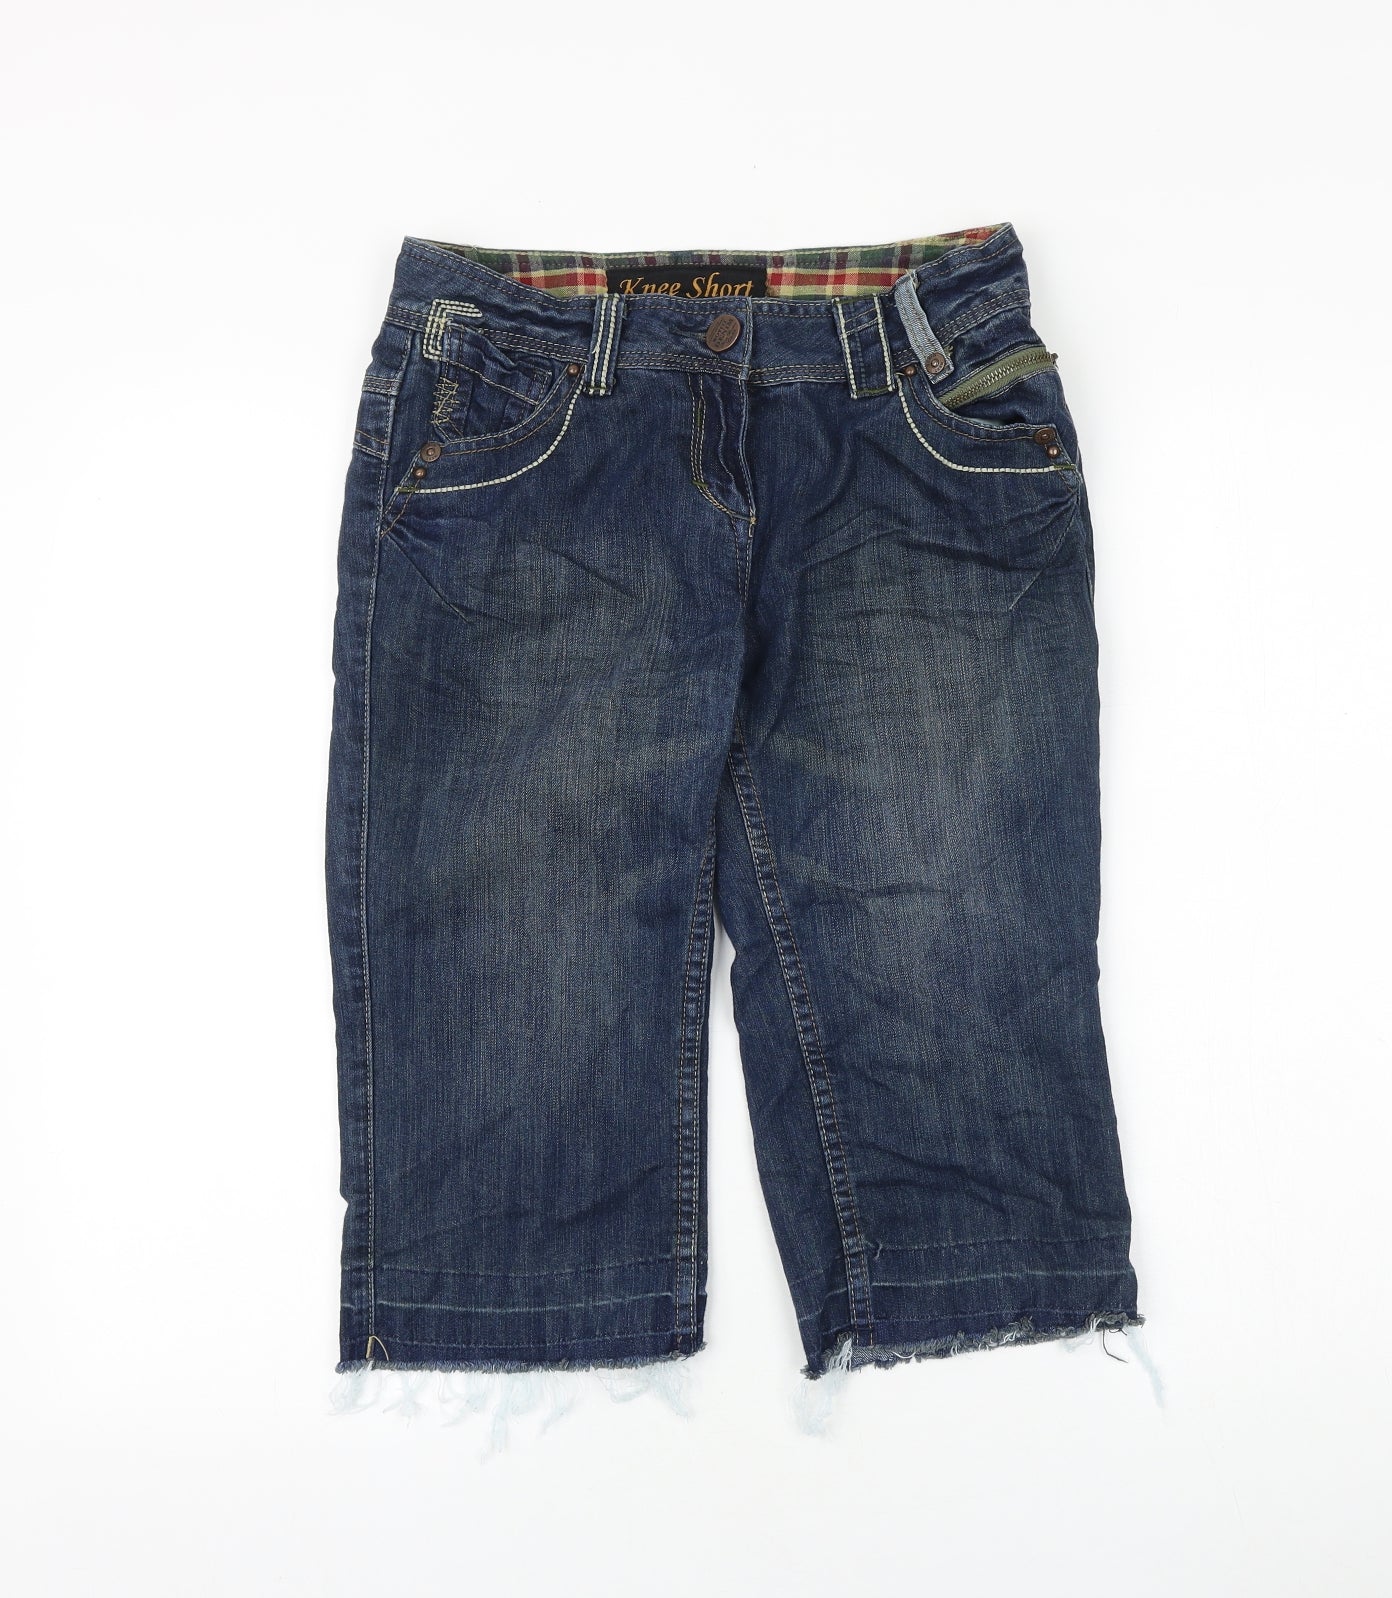 NEXT Womens Blue Cotton Cropped Jeans Size 8 Regular Zip